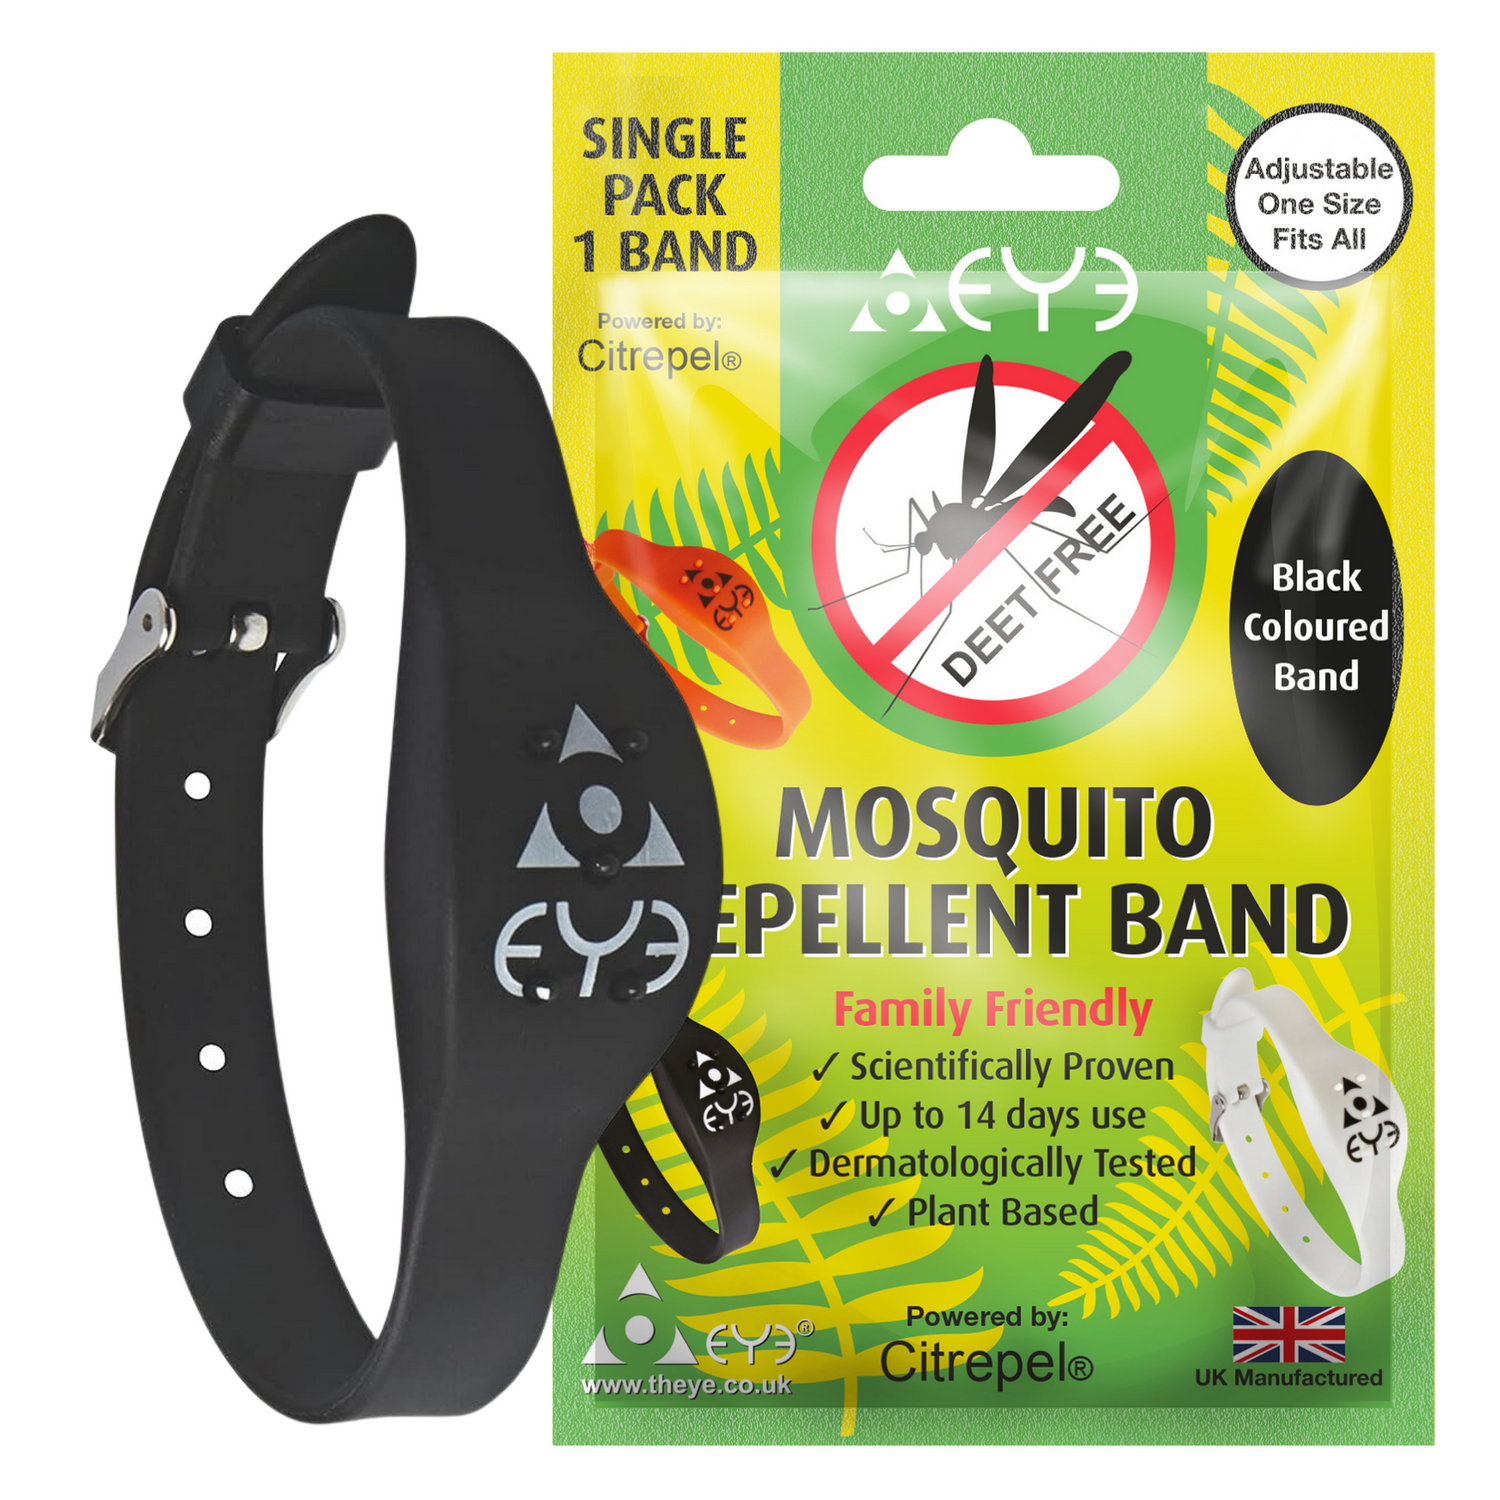 Cliganic Mosquito Repellent Bracelet Review 2019 | The Strategist